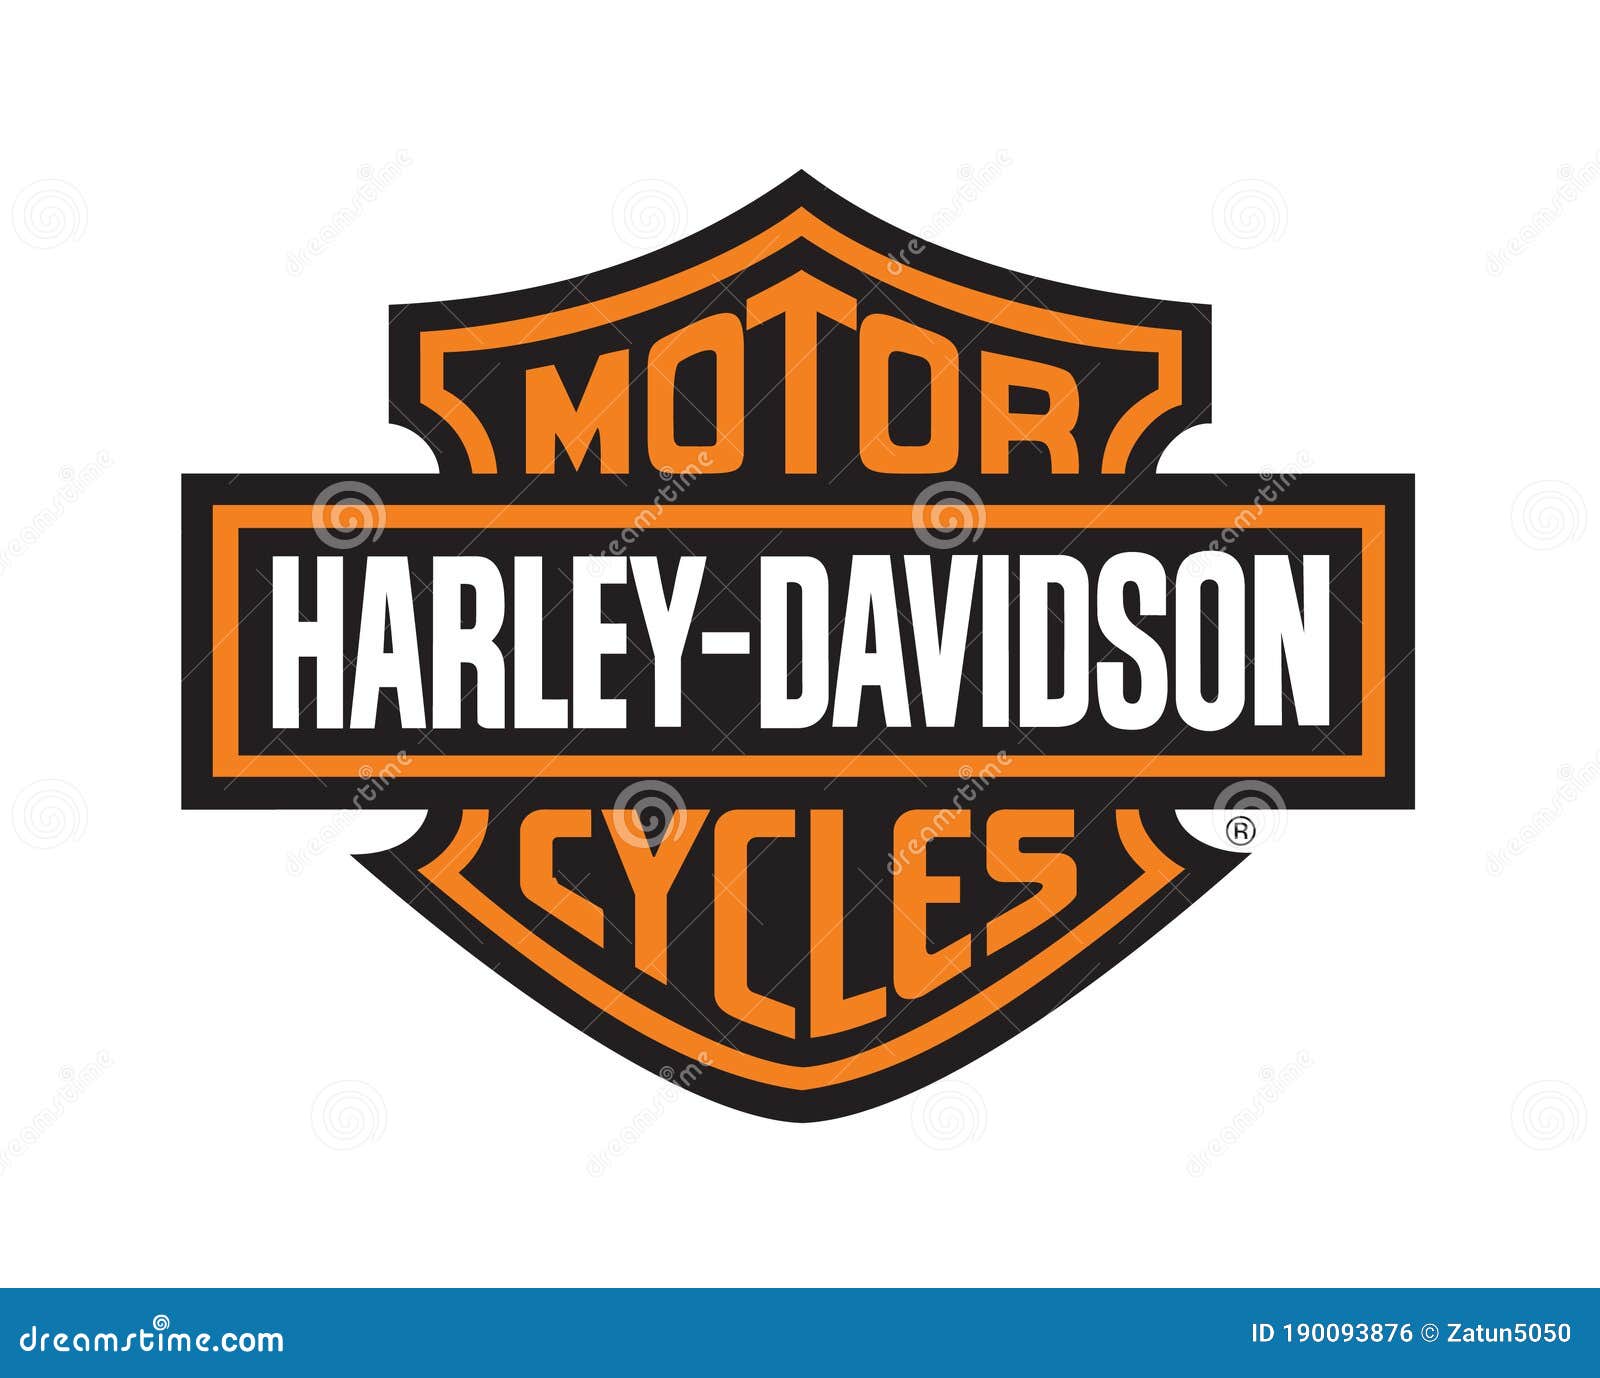 Harley Davidson Logo Stock Illustrations 129 Harley Davidson Logo Stock Illustrations Vectors Clipart Dreamstime